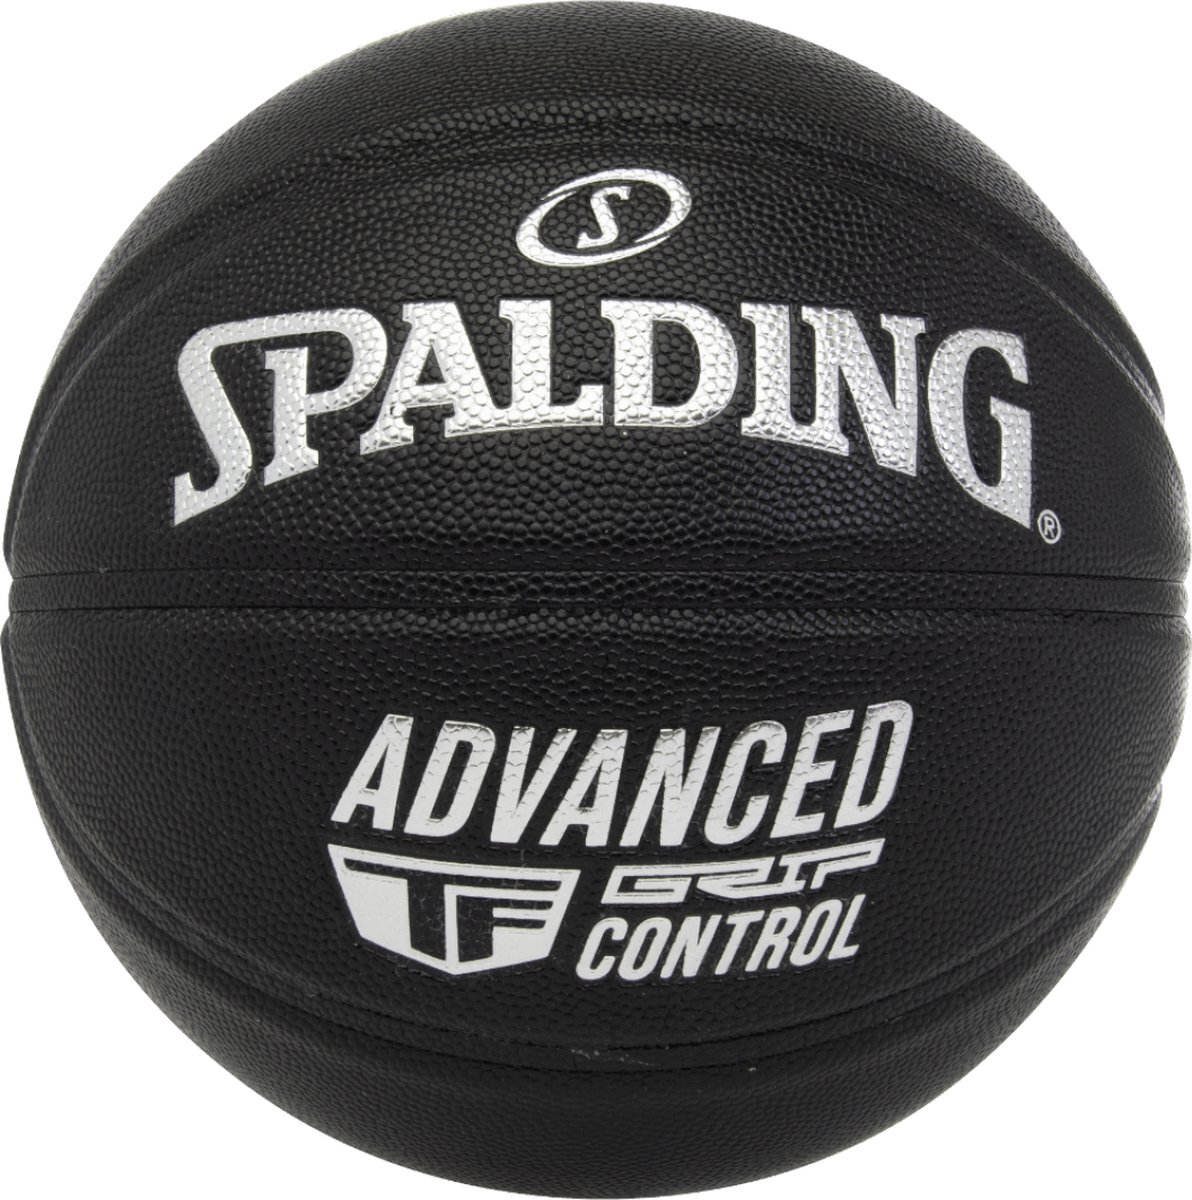 Spalding Advanced Grip Control (Size 7) Basketbal Heren - Zwart